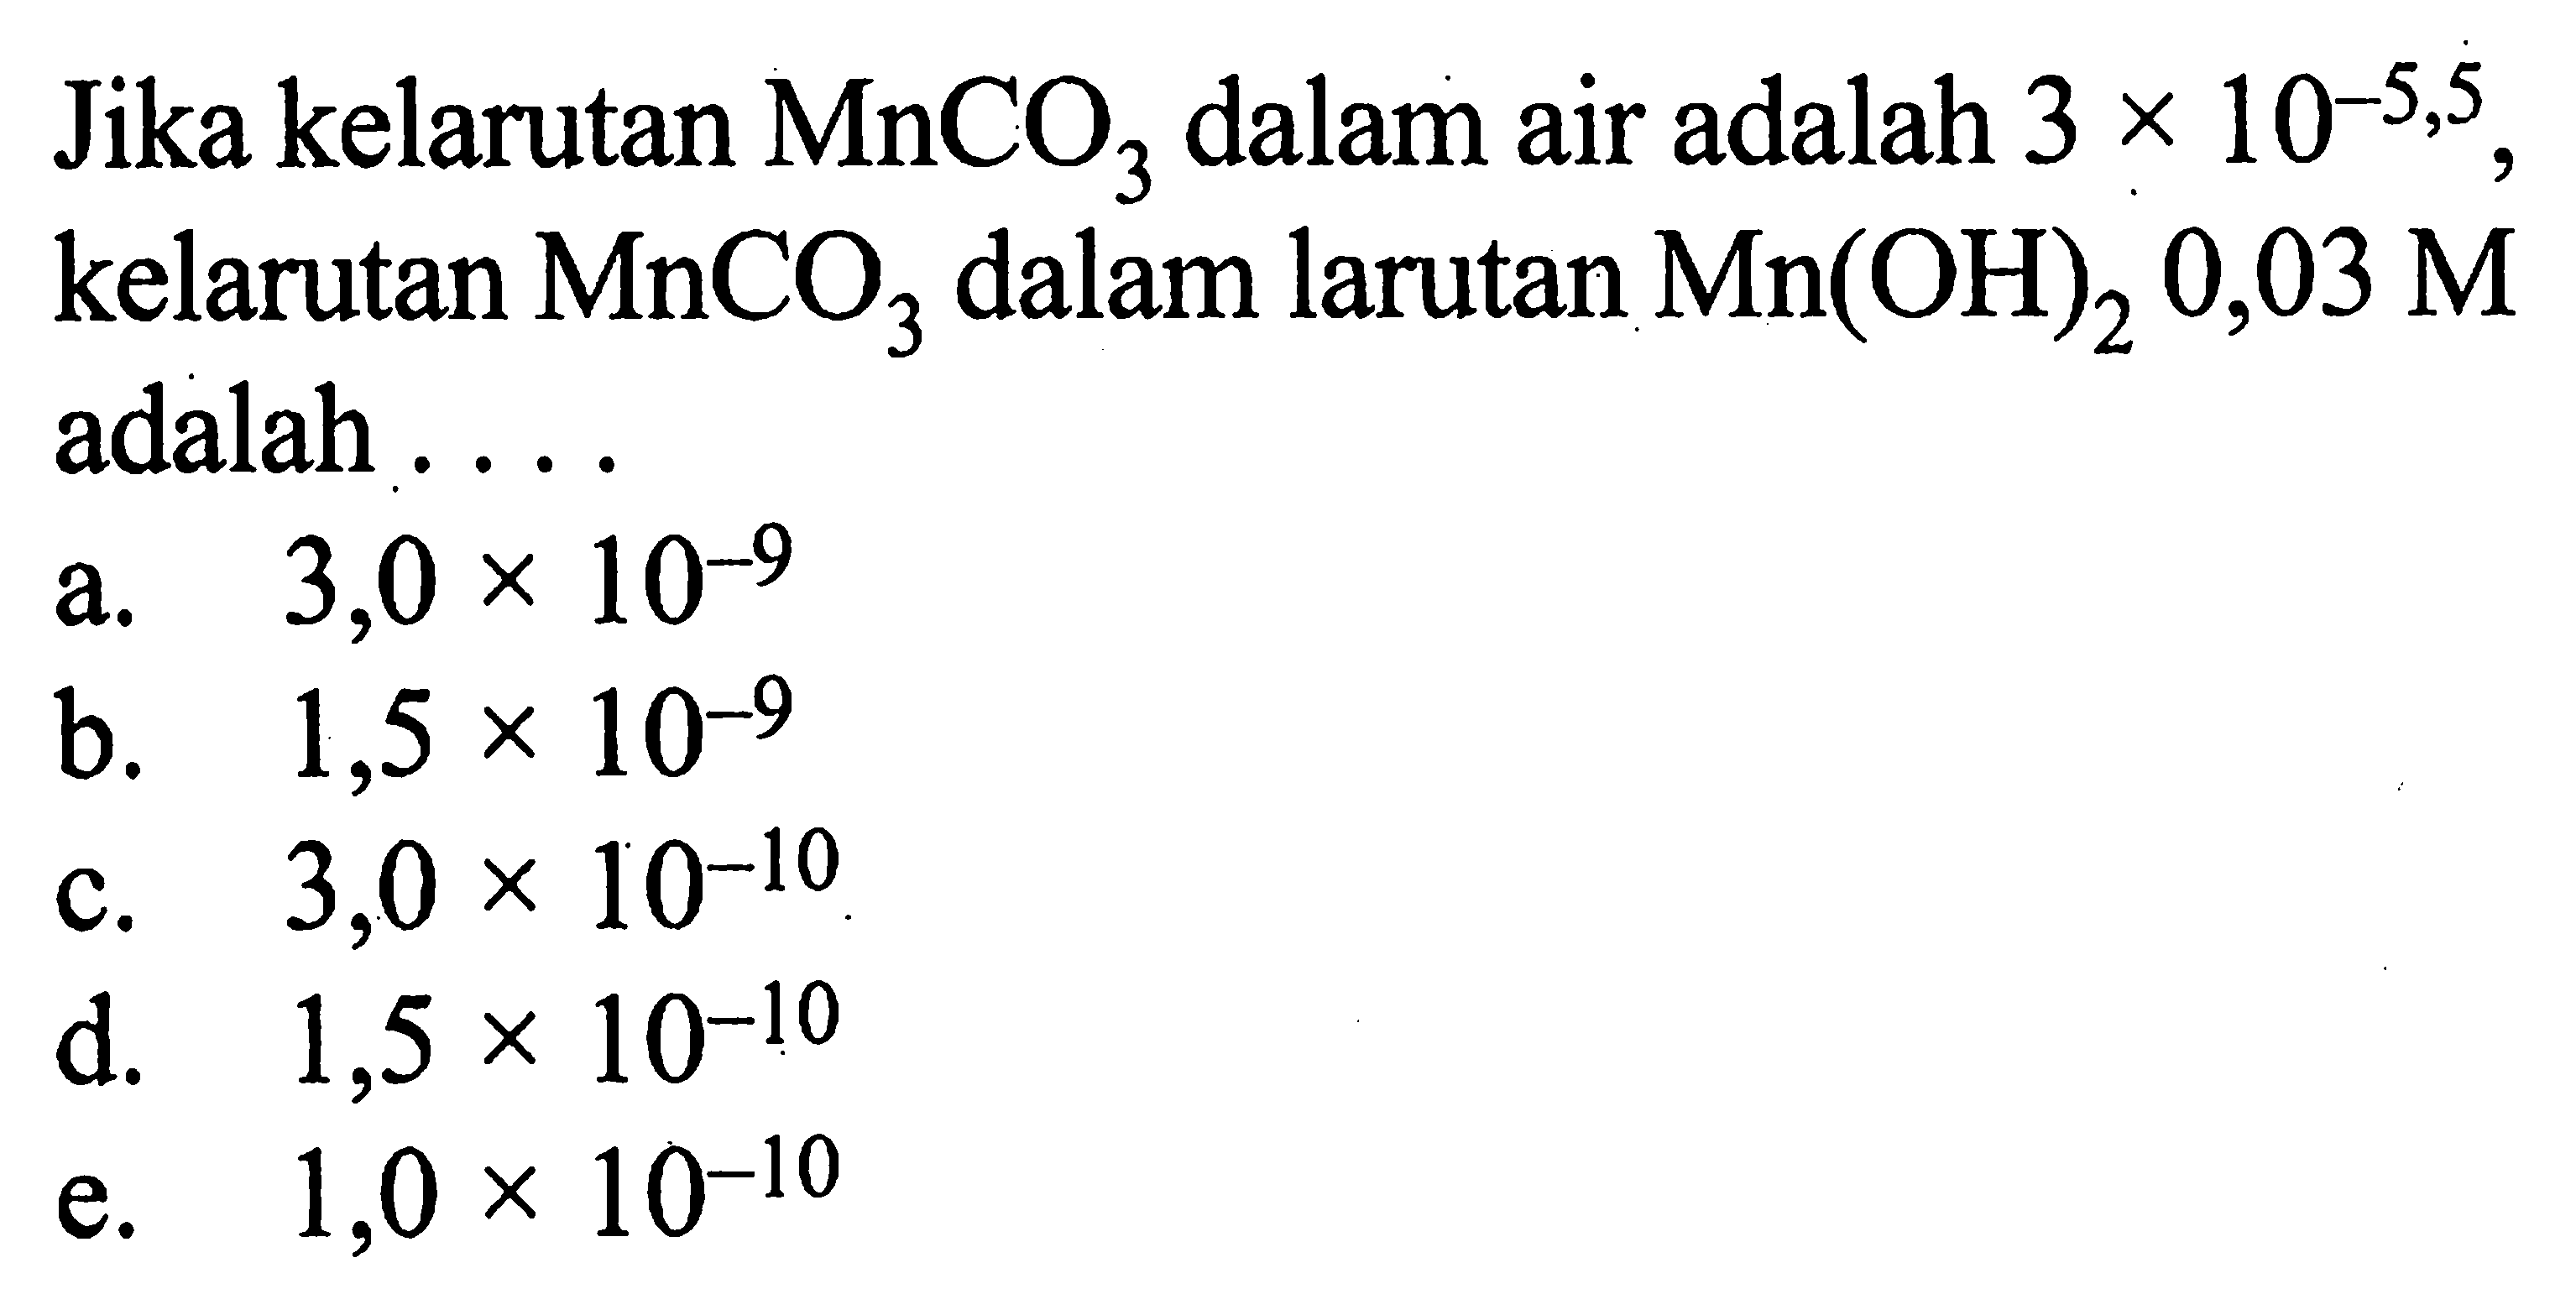 Jika kelarutan MnCO3 dalam air adalah 3 x 10^-5,5, kelarutan MnCO3 dalam larutan Mn(OH)2 0,03 M adalah ....